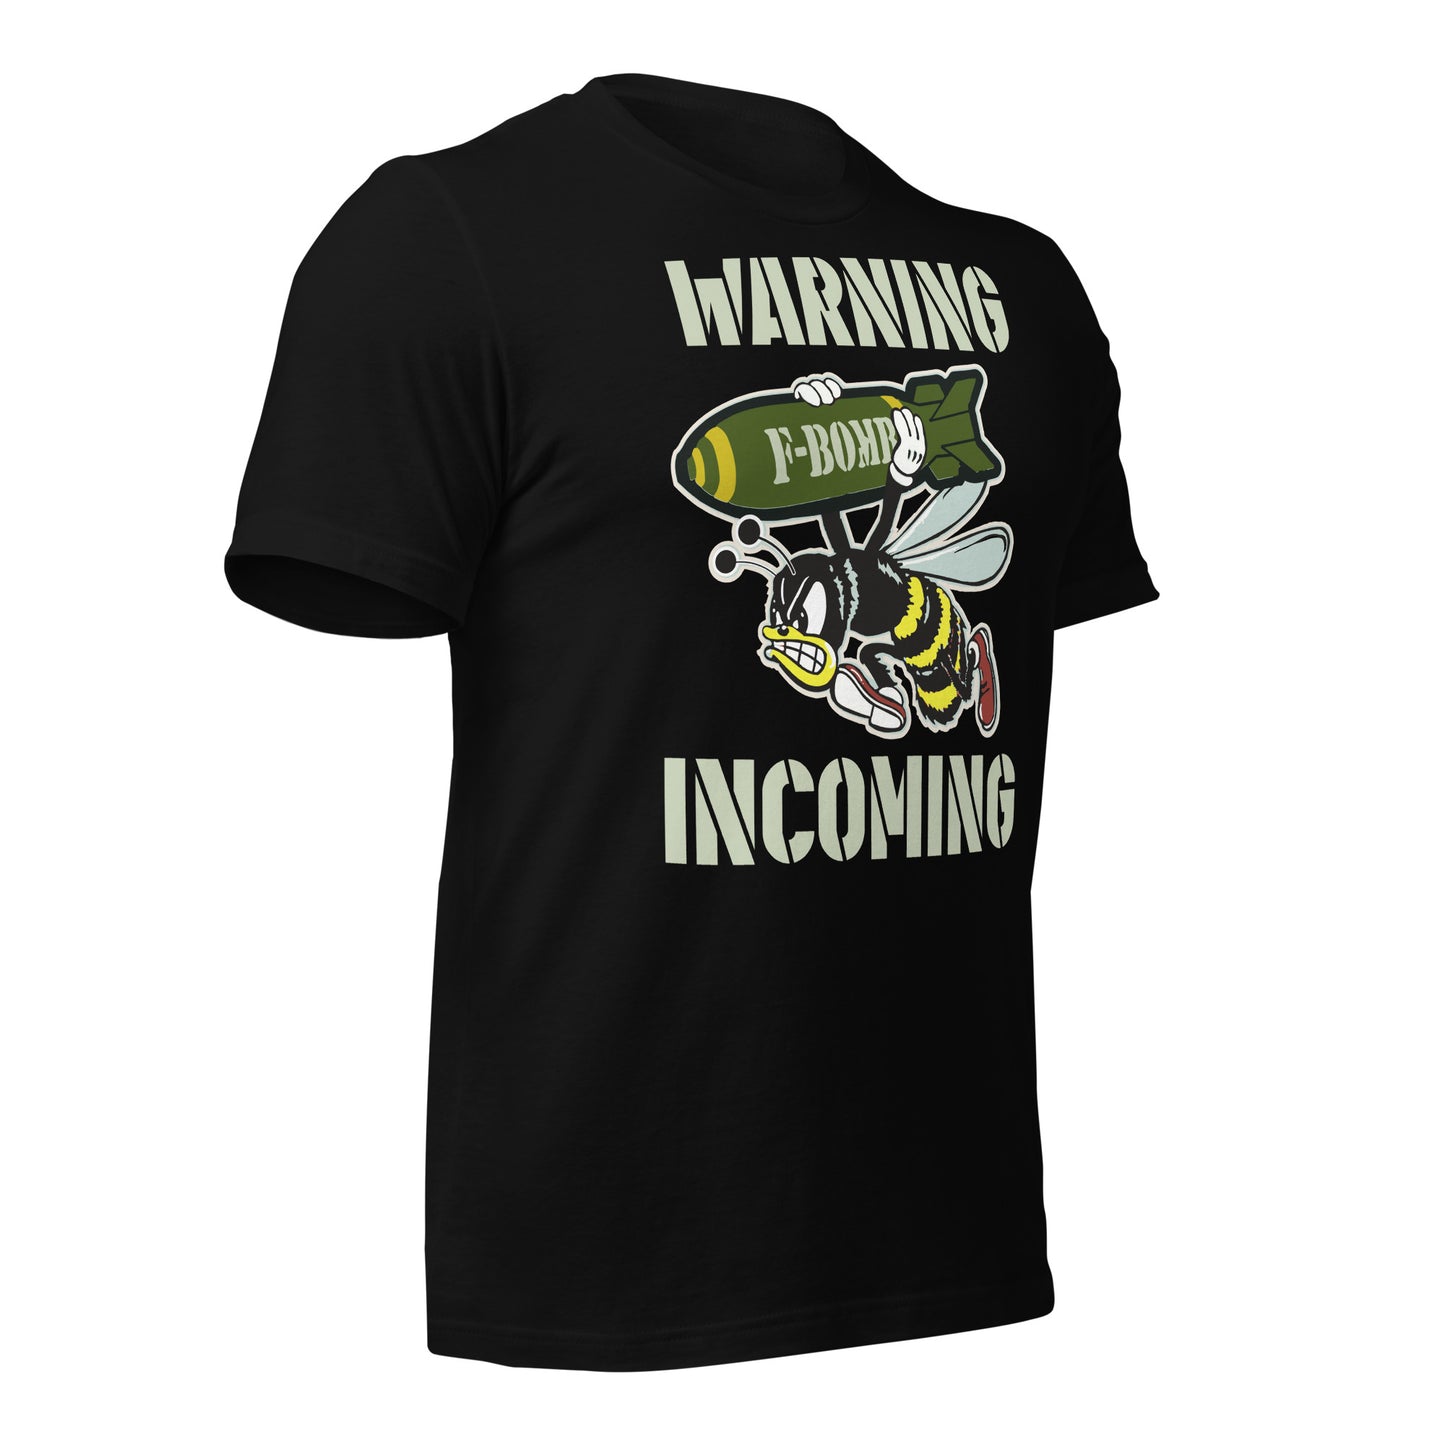 WARNING F-BOMB INCOMING - BELLA+CANVAS - Unisex t-shirt